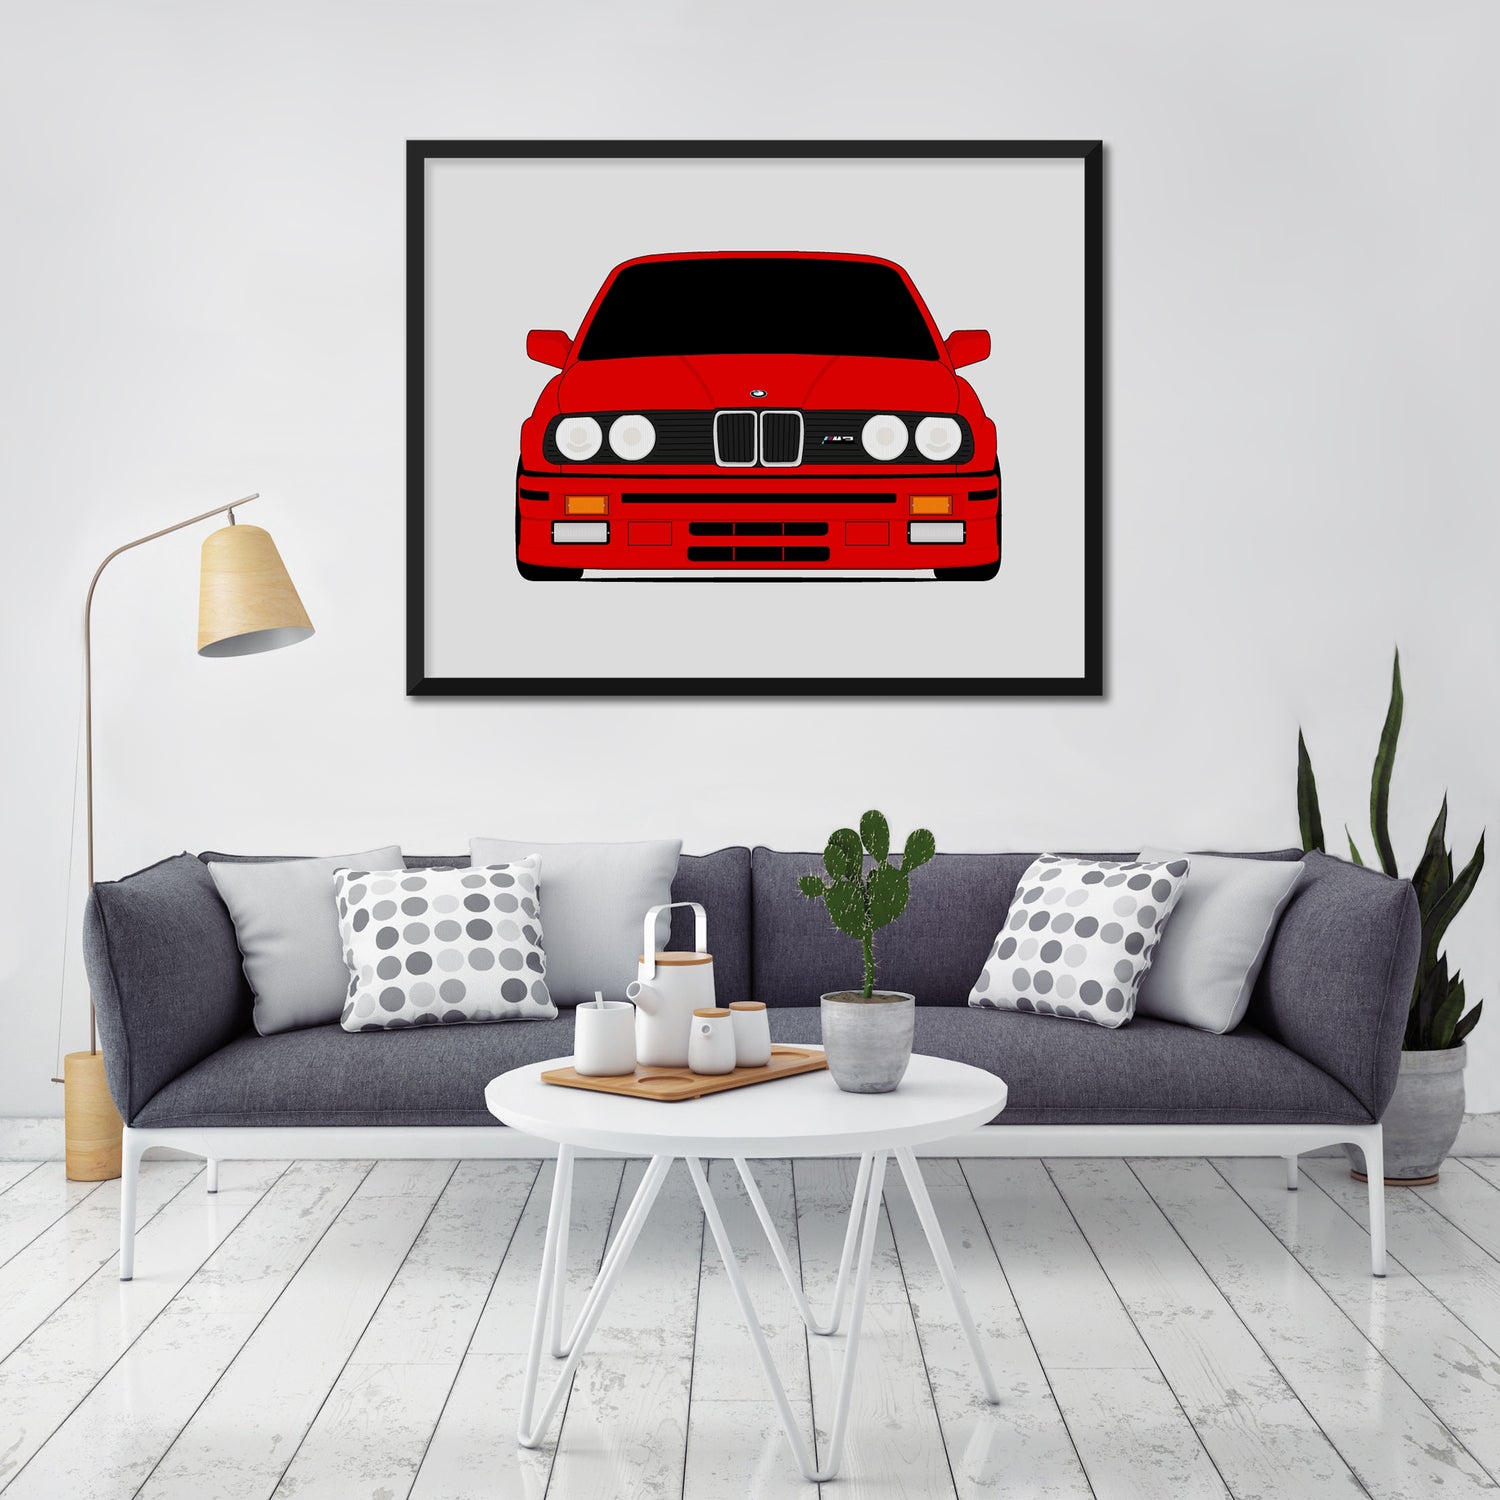  Inspirational Wall Art Co. - Legendary, 1984 BMW E30 M3 Poster  - Car Posters for Boys Room - Car Wall Decor - Car Room Decor - Car Posters  for Men